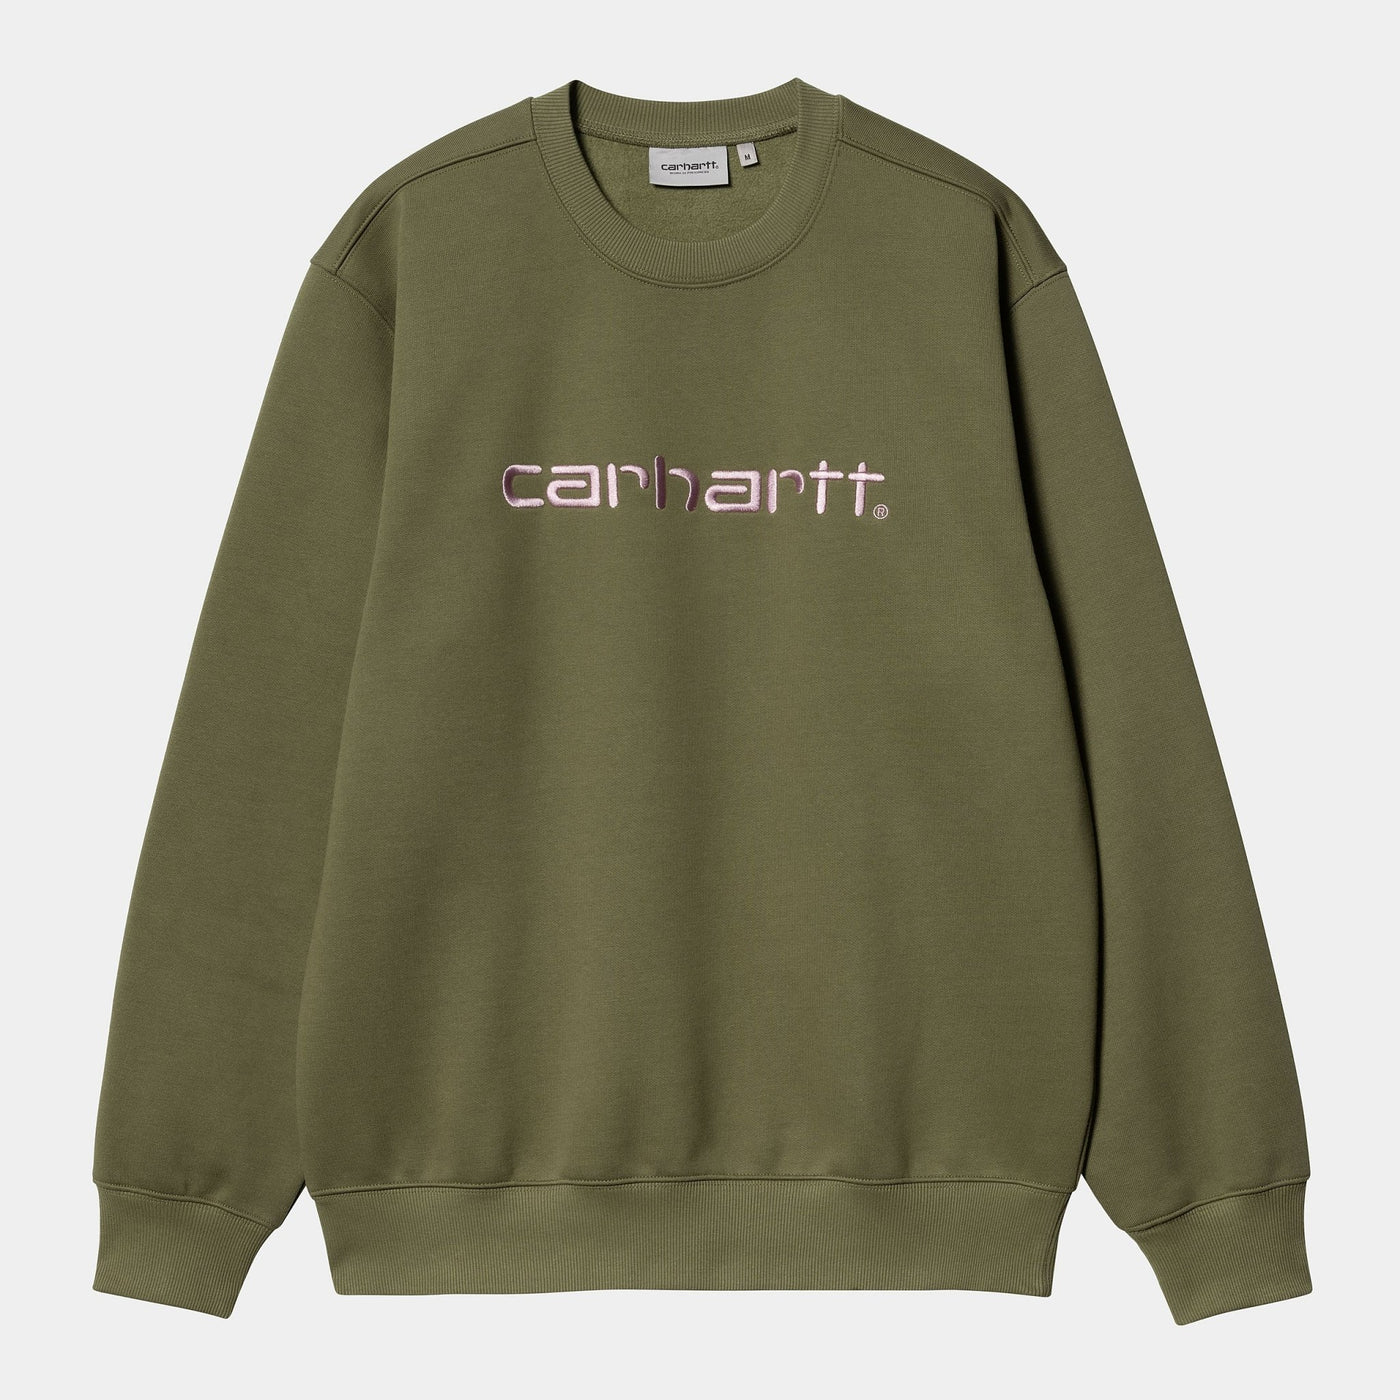 Carhartt - Le sweat-shirt 'Carhartt' Glassy Pink - Lothaire